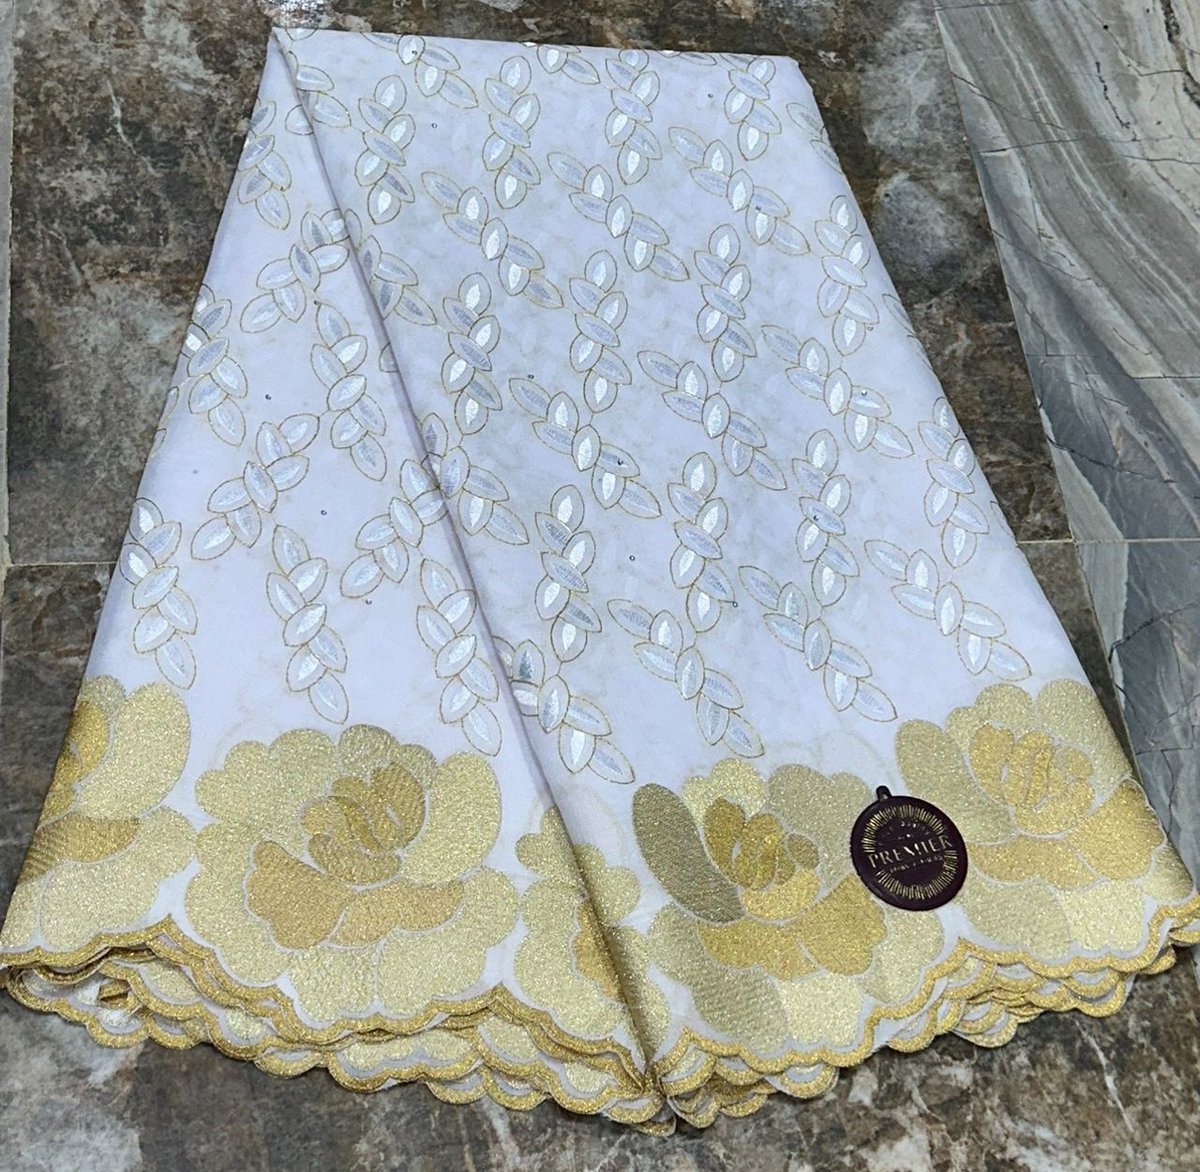 Aren't they beautiful 
NGN 20,500 each 
Swiss lace

chat.whatsapp.com/DvNdSxUPJ8CGUh…

WhatsApp 08180334254.
Minna, Niger State 

#lagos #fabric #fabricstore #fabricsellerinlagos #cotton #laceweddingdress #abujaweddings #cottonfabric #asoebifabrics #Lagosfabrics #lacevendor